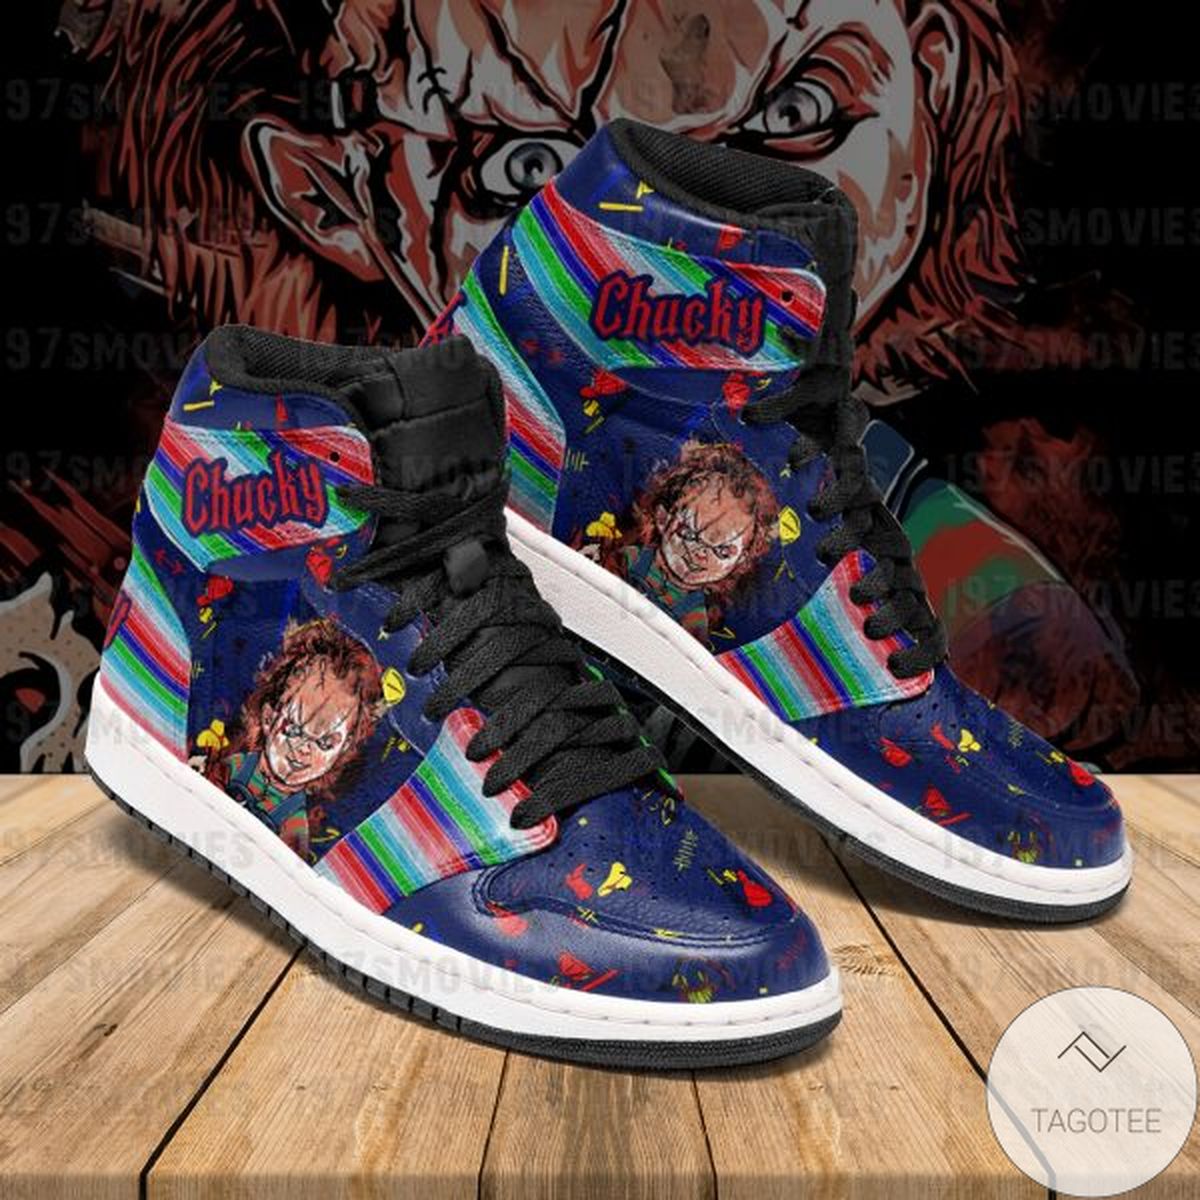 Chucky Child’s Play Sneaker Air Jordan High Top Shoes